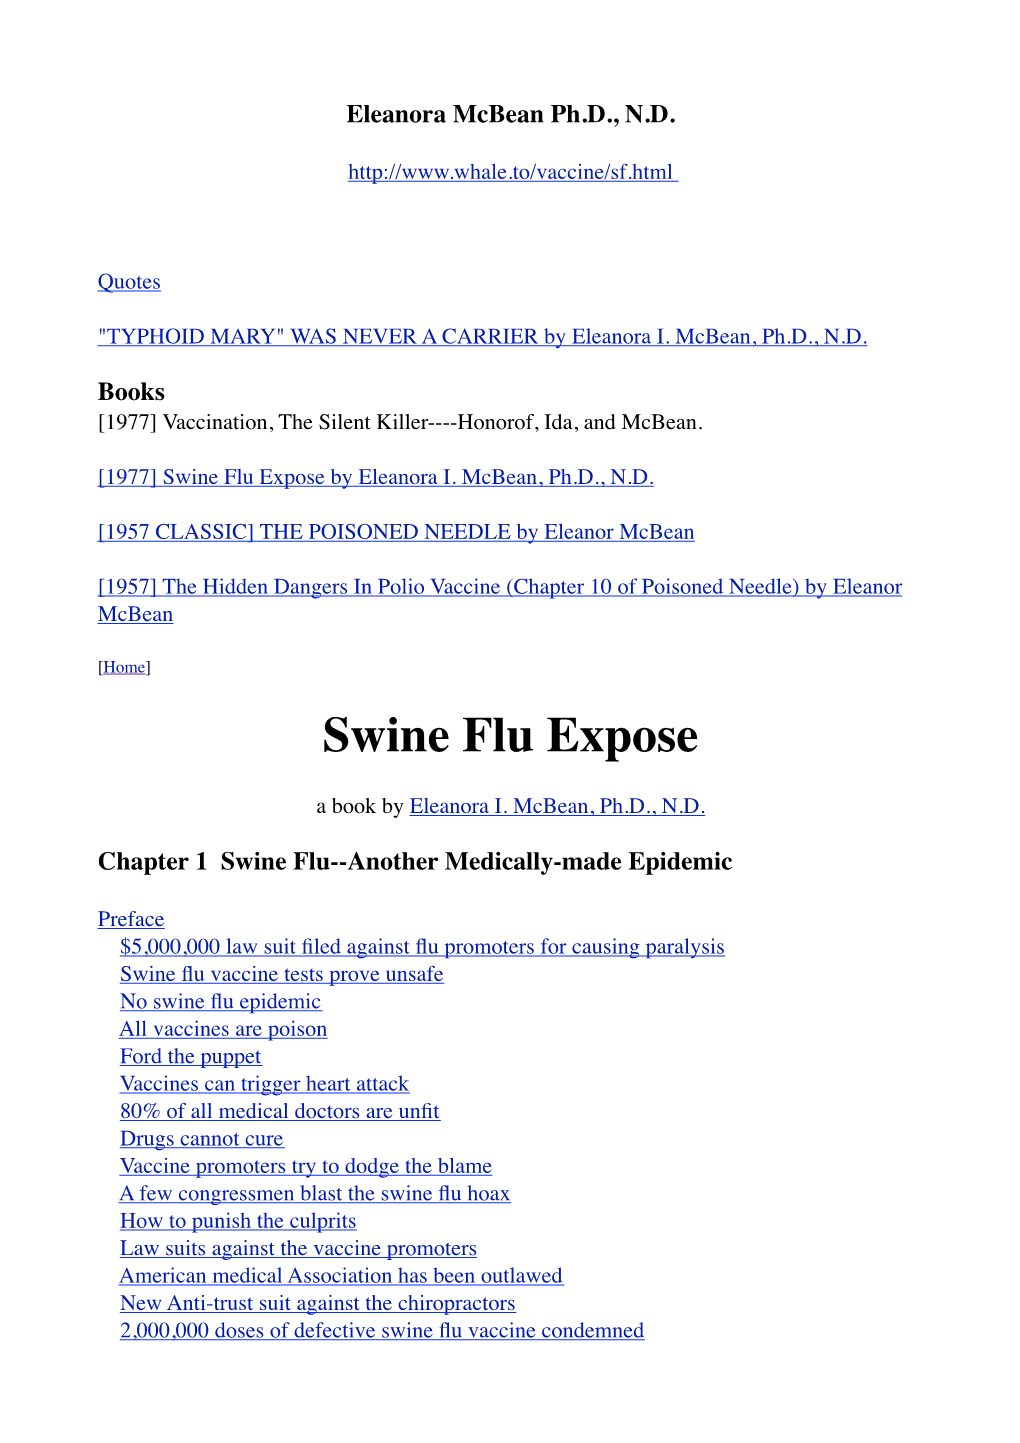 Swine Flu Expose by Eleanora I